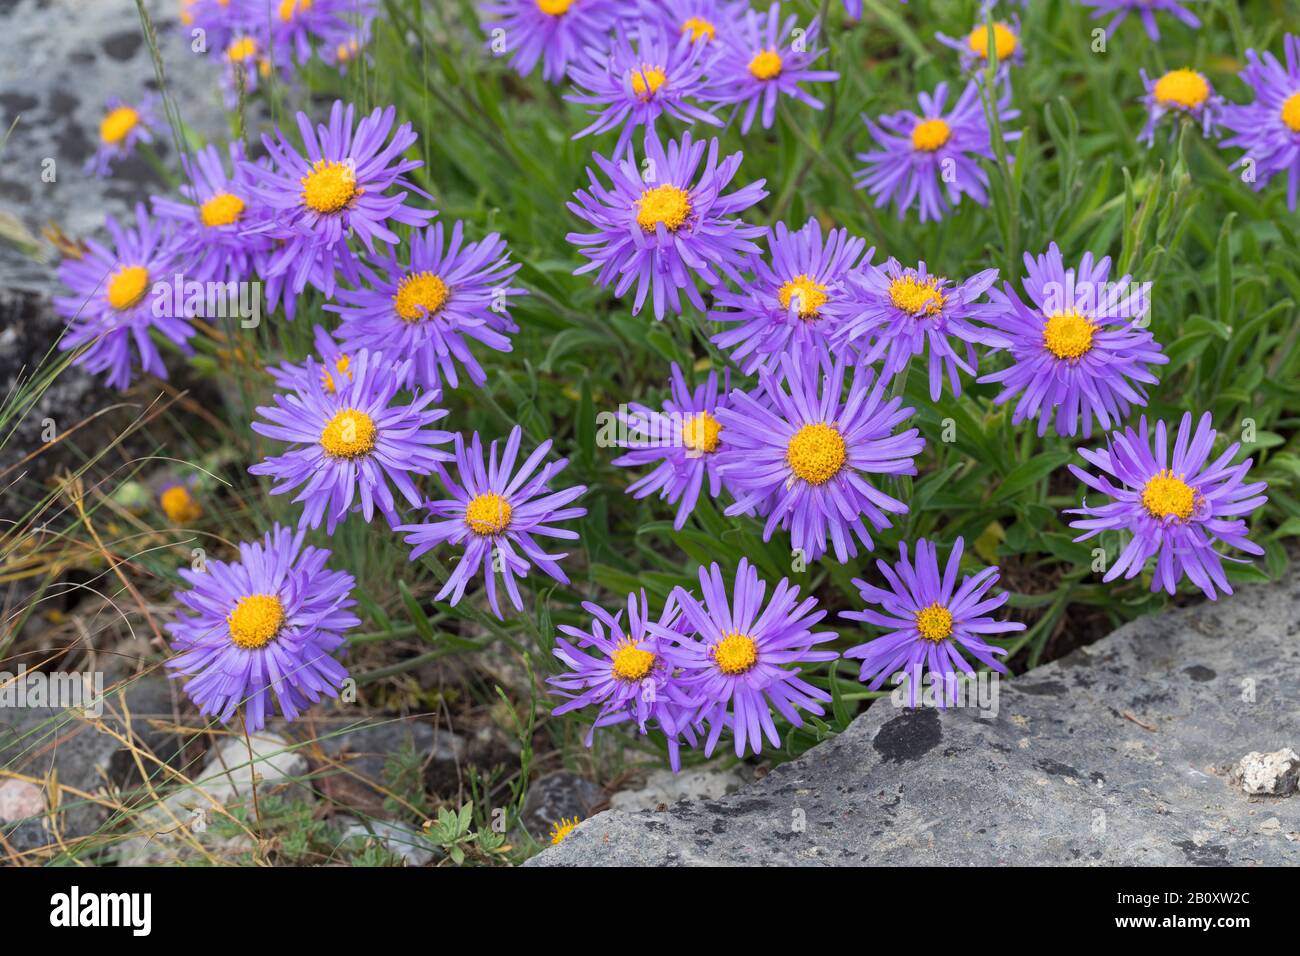 Boreal, alpino aster Aster (Aster alpinus), floreciendo, Alemania Foto de stock